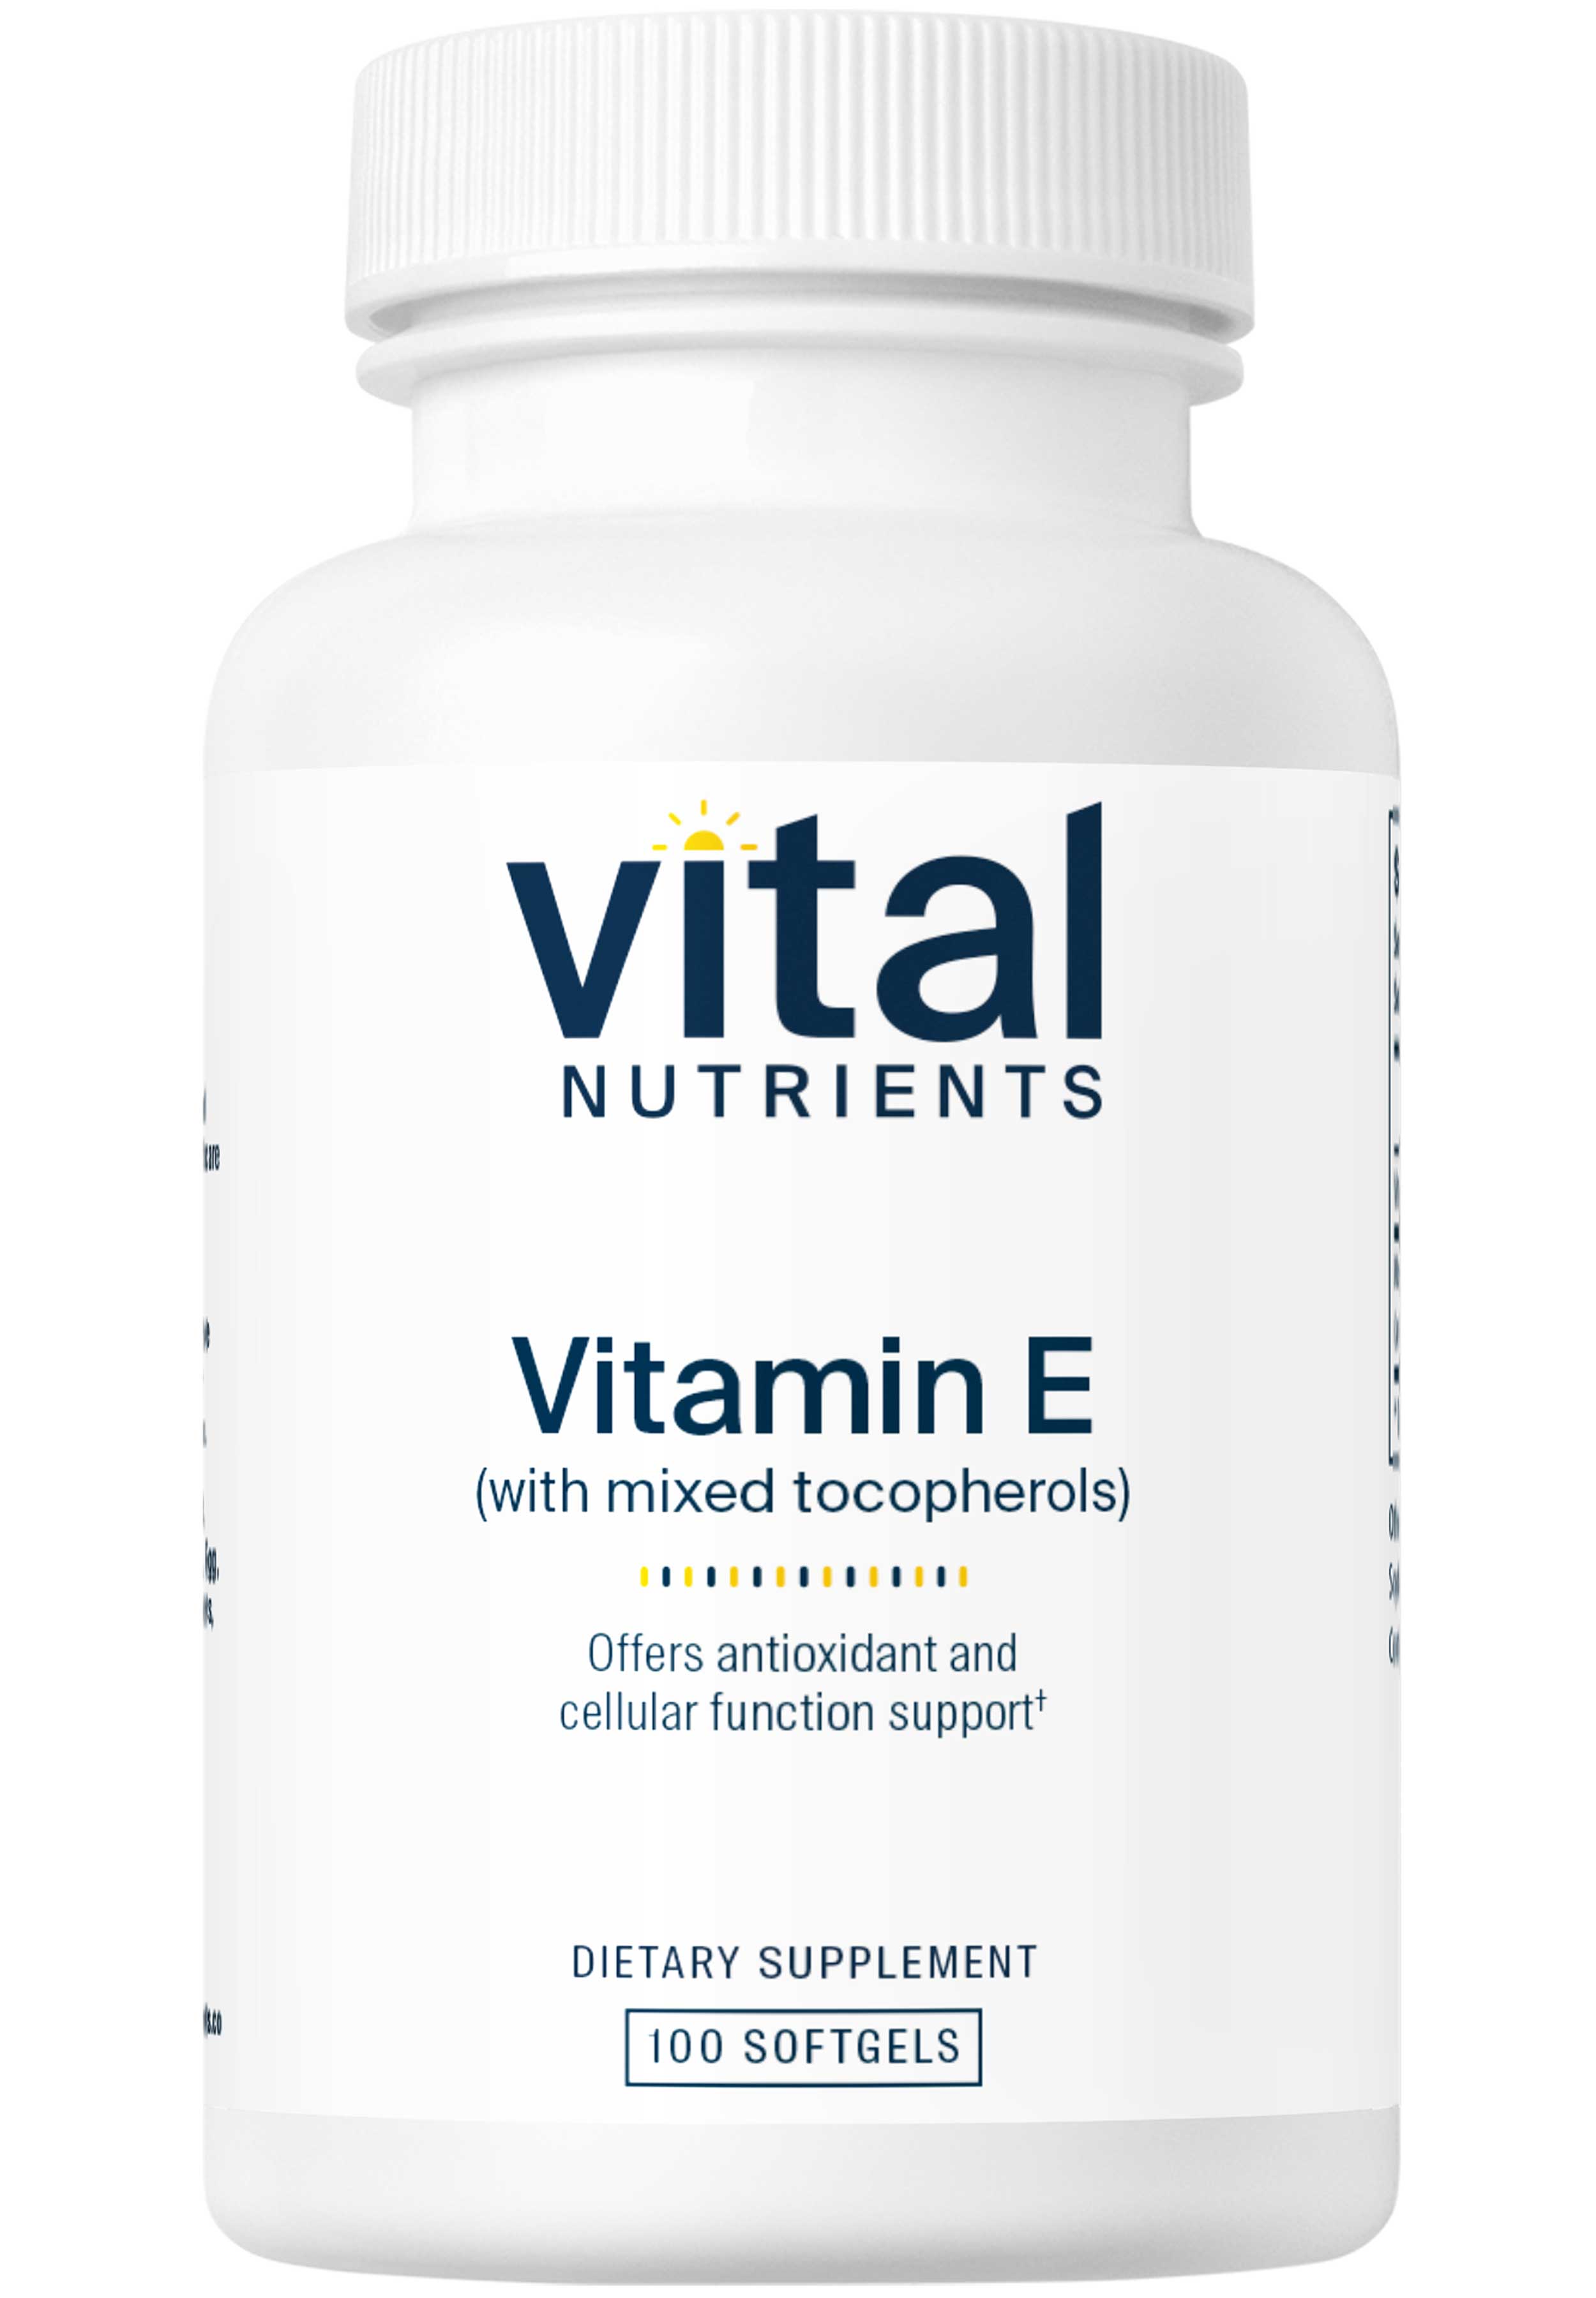 Vital Nutrients Vitamin E 400 IU (with mixed tocopherols)